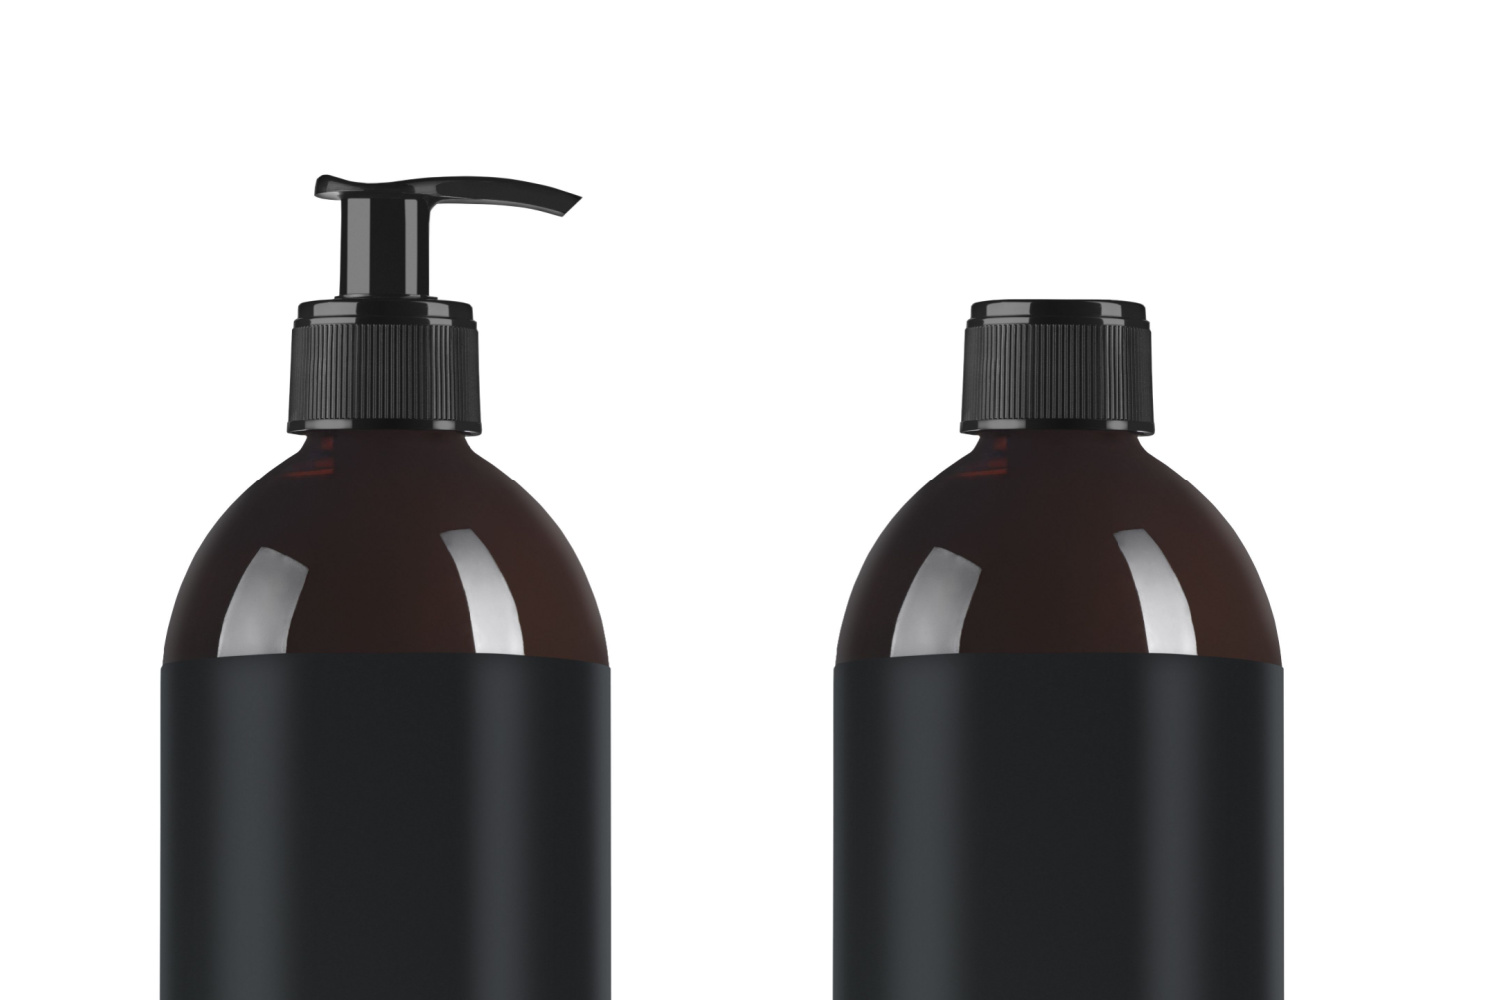 Explore how to lock shampoo bottles.